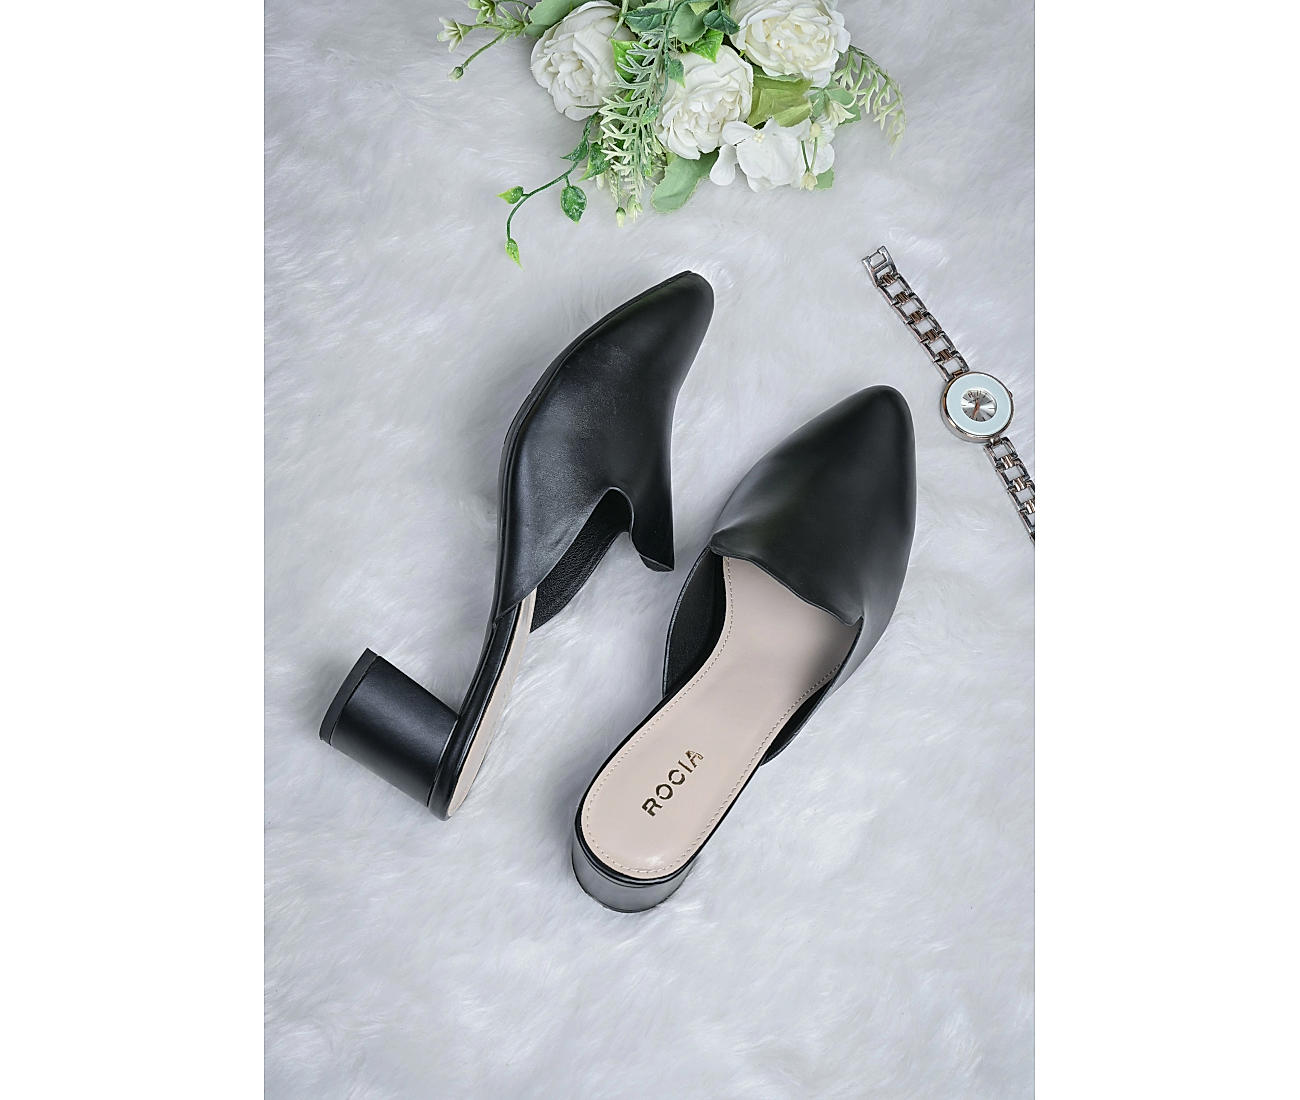 Brown Block Strappy Sandals. | Chunky heels sandals, Peep toe high heel,  Heels